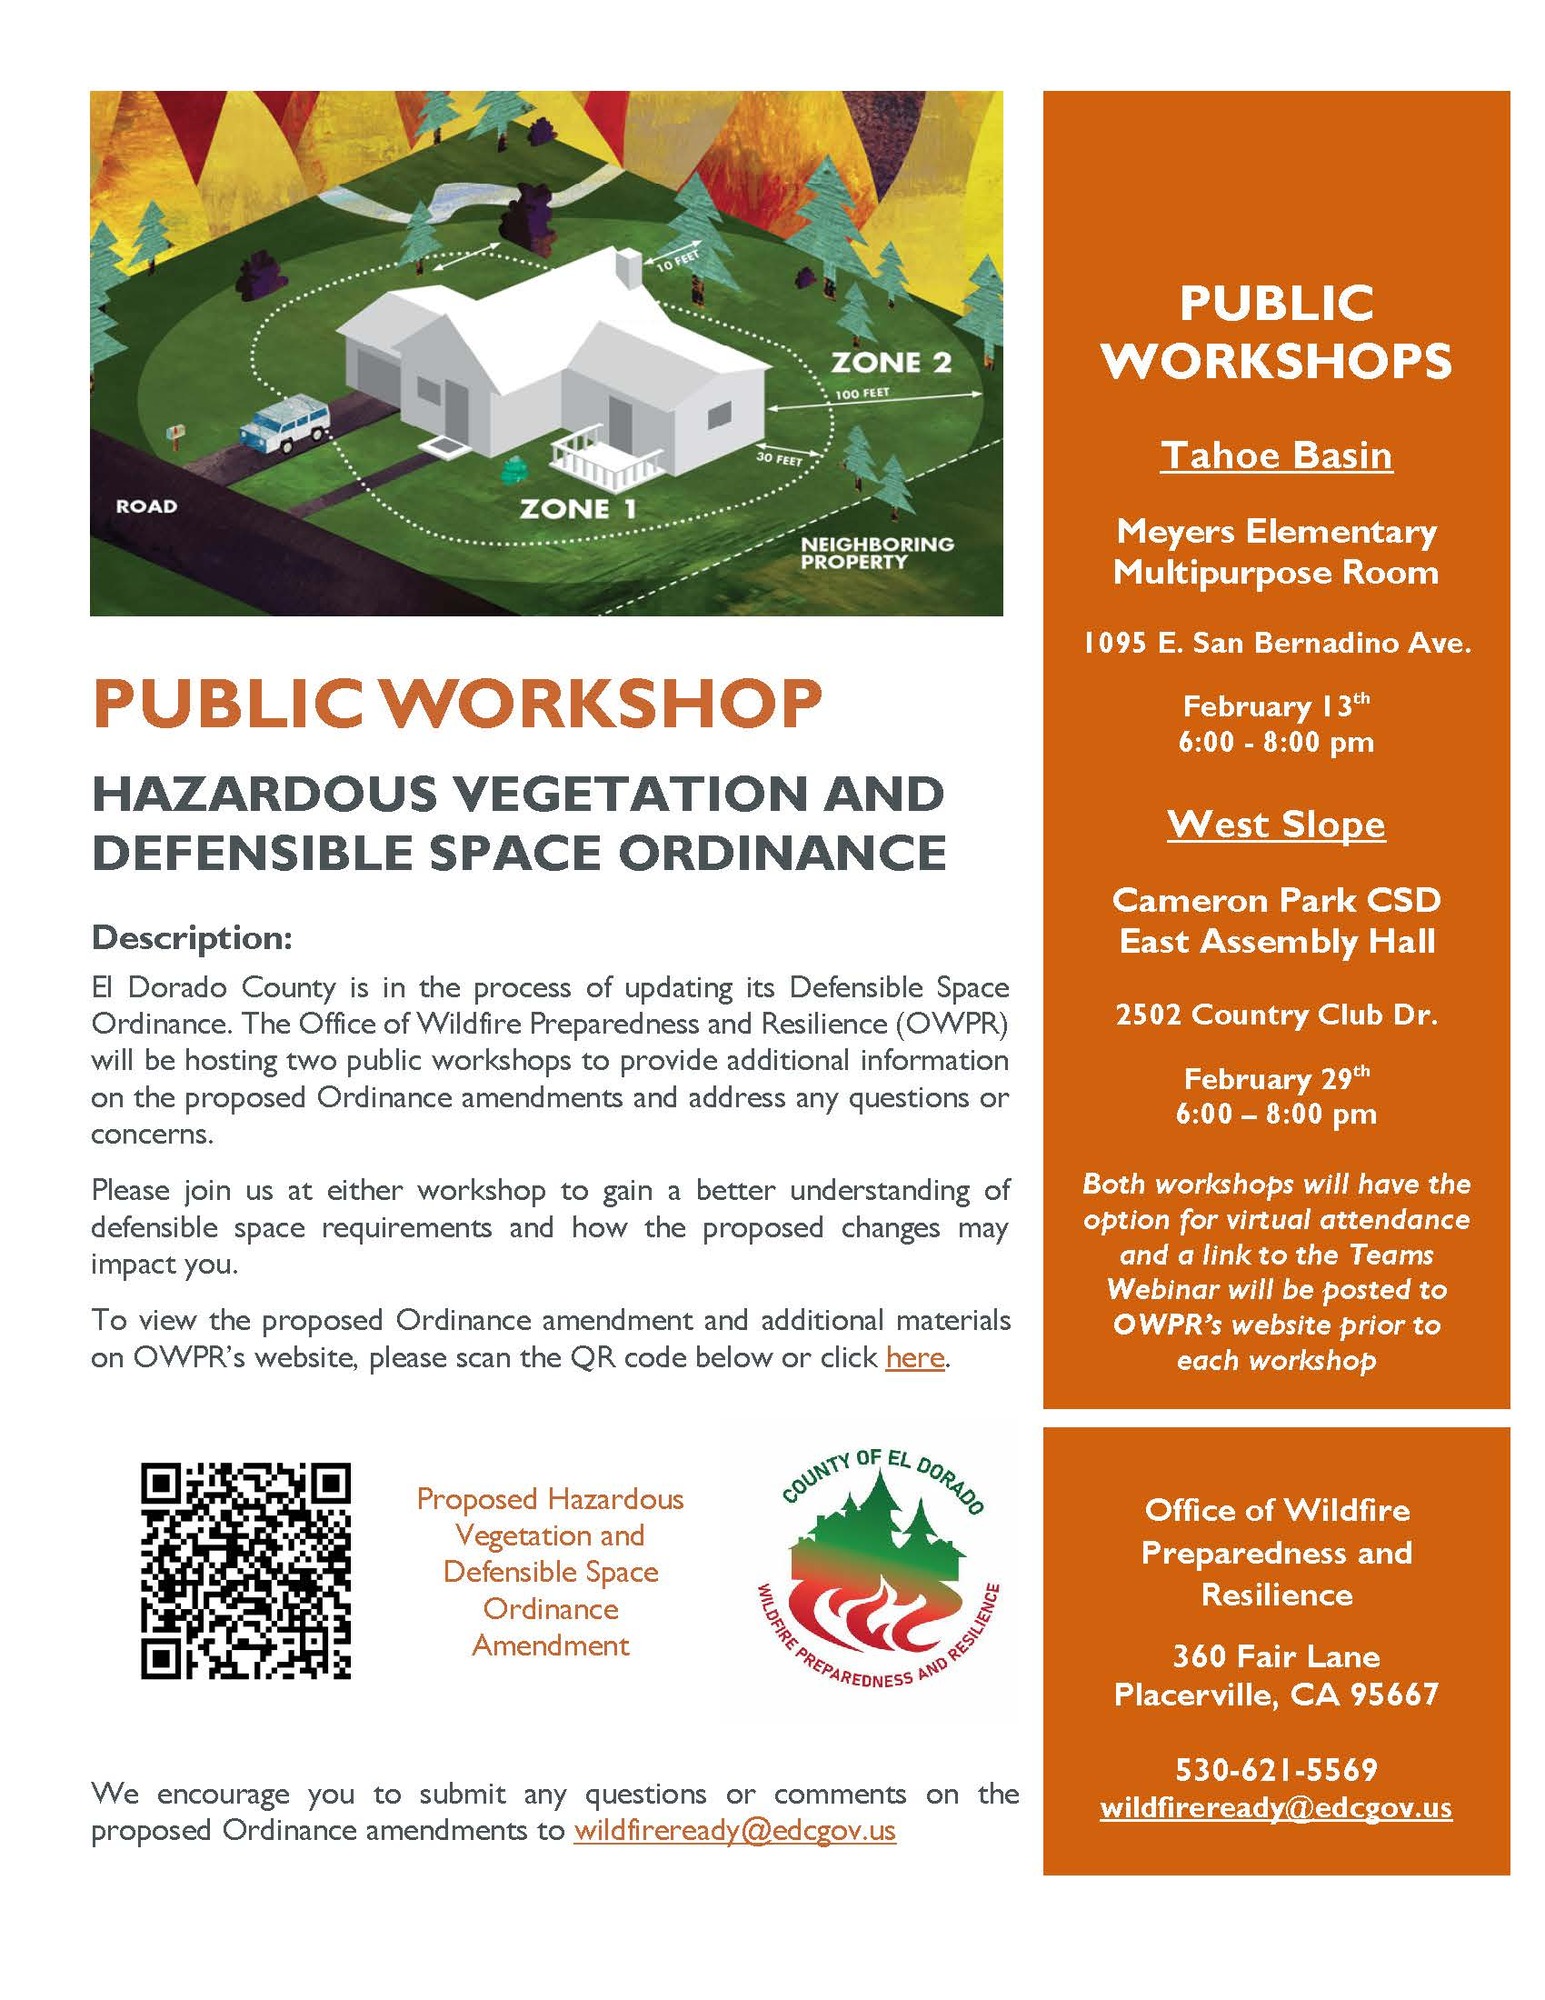 OWPR Public Workshop Flyer